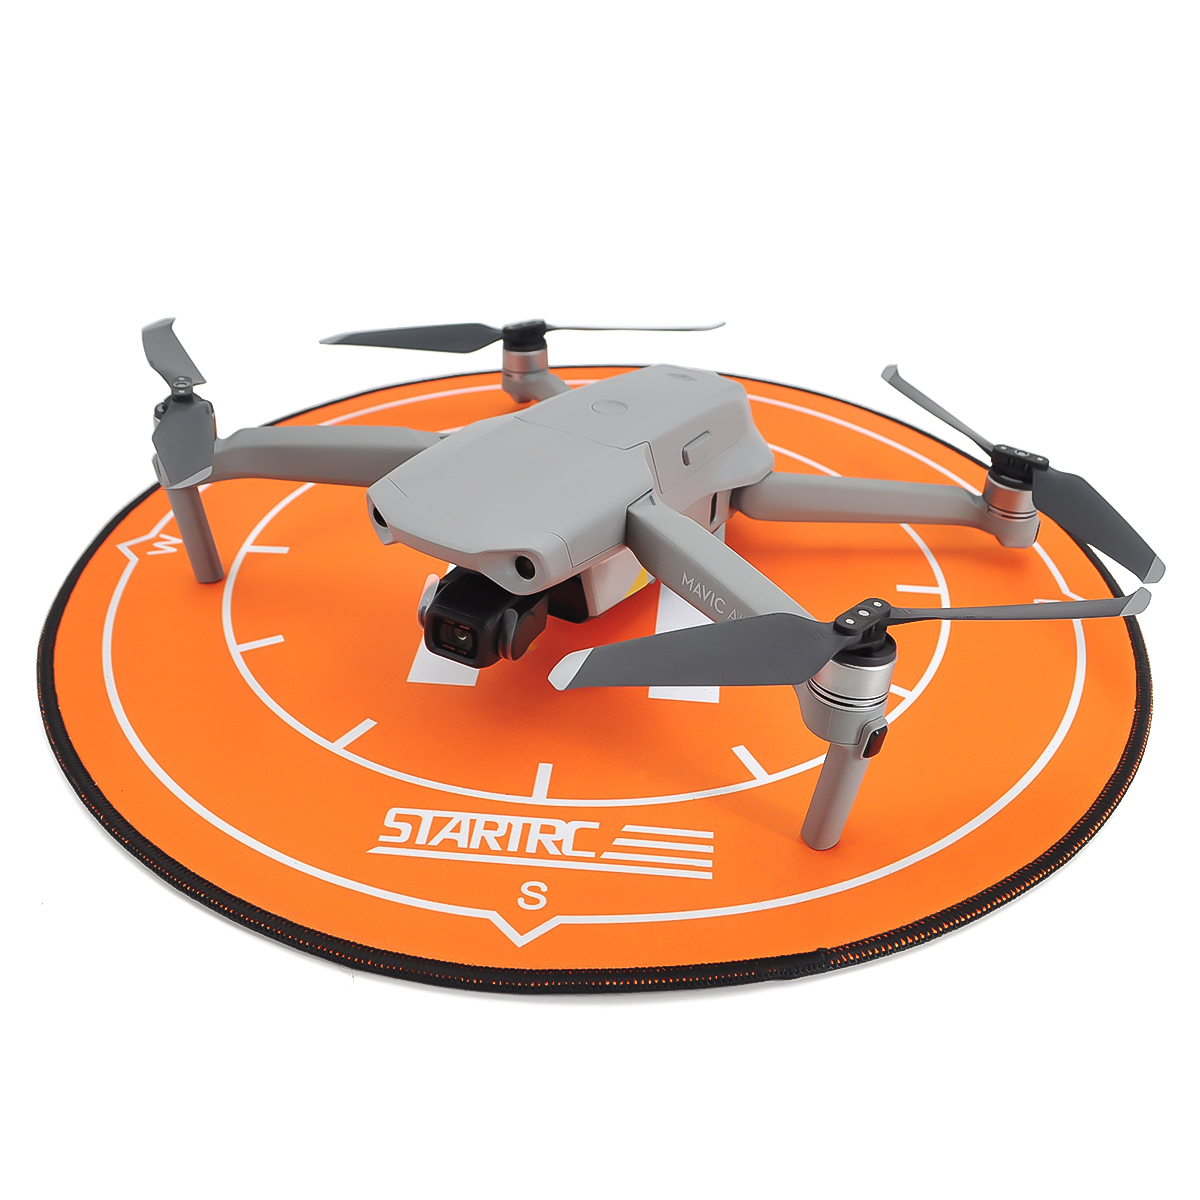 40cm mavic air 2 landing pads mat drone landing pad til dji mavic air 2 /  mavic pro / phantom / gnist tilbehør